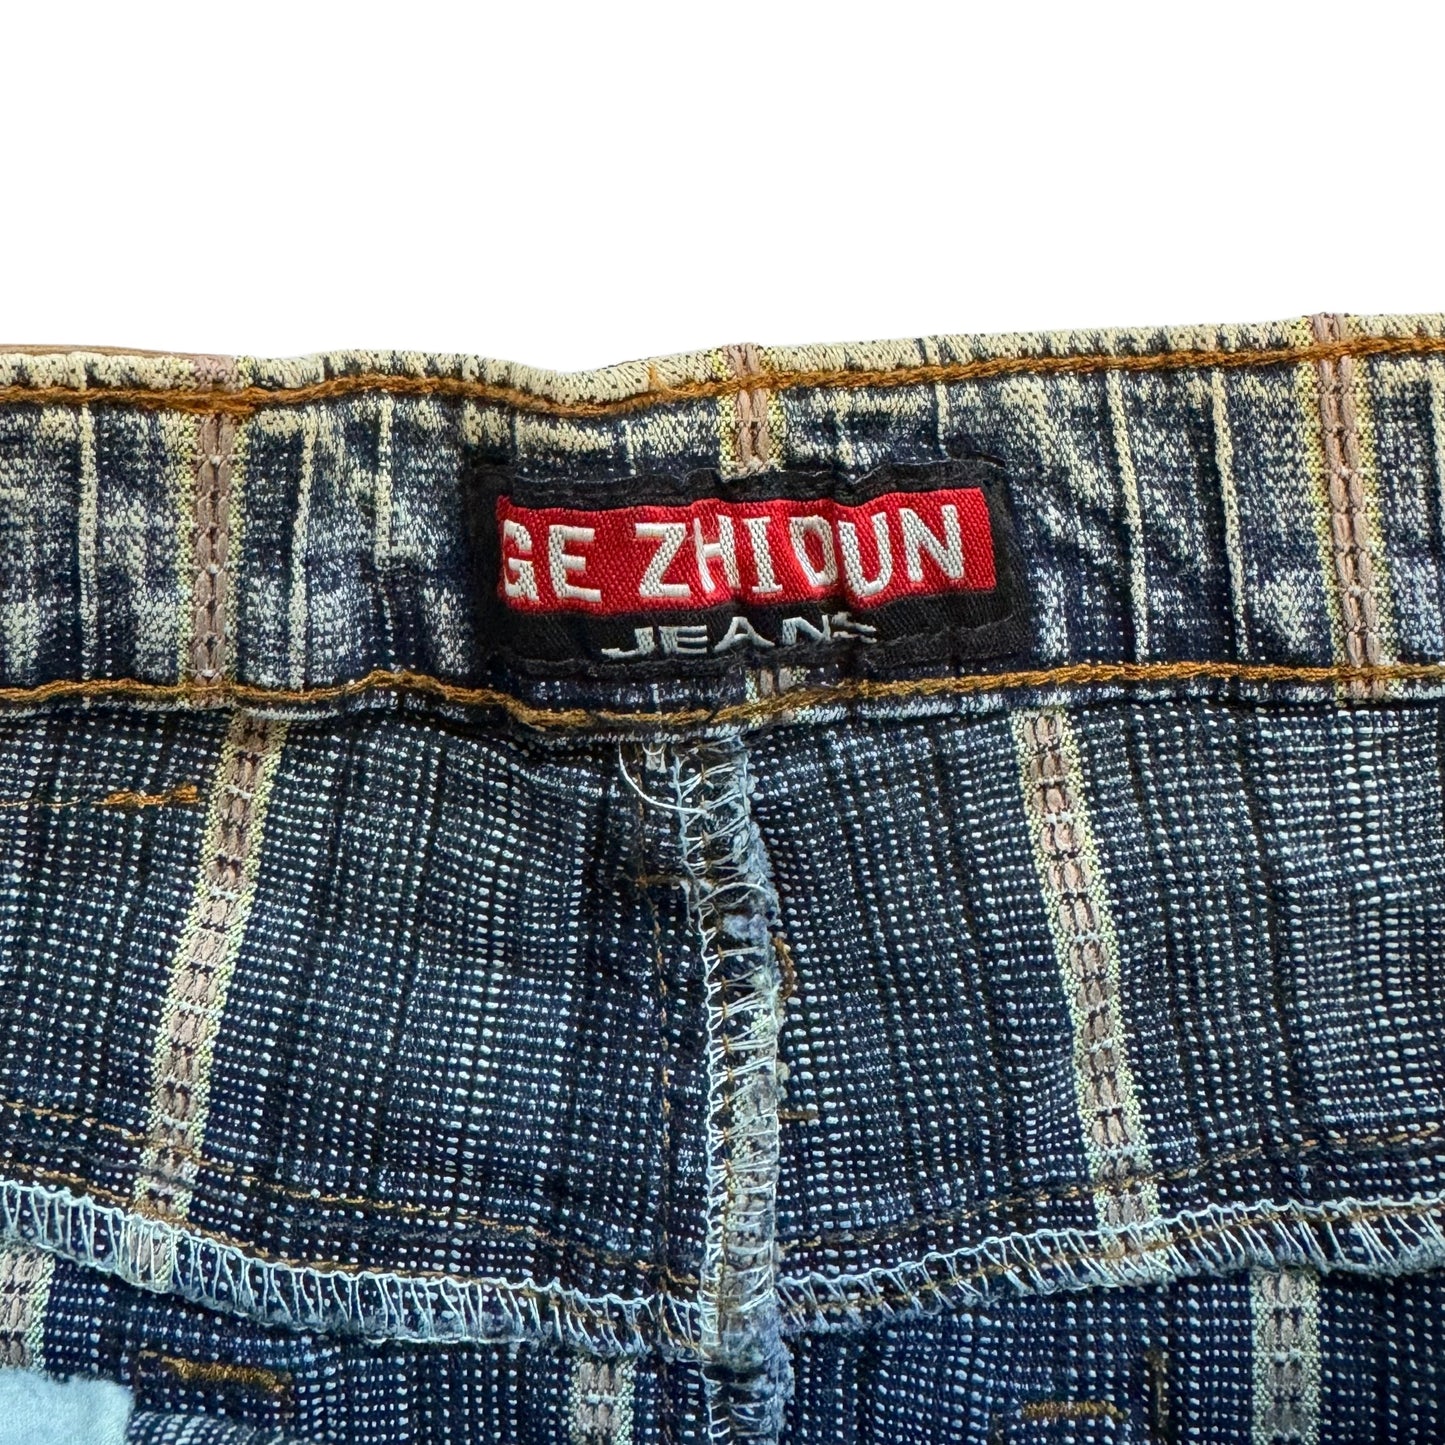 Vintage 2000s Y2k Ge Zhioun Denim Midi Skirt